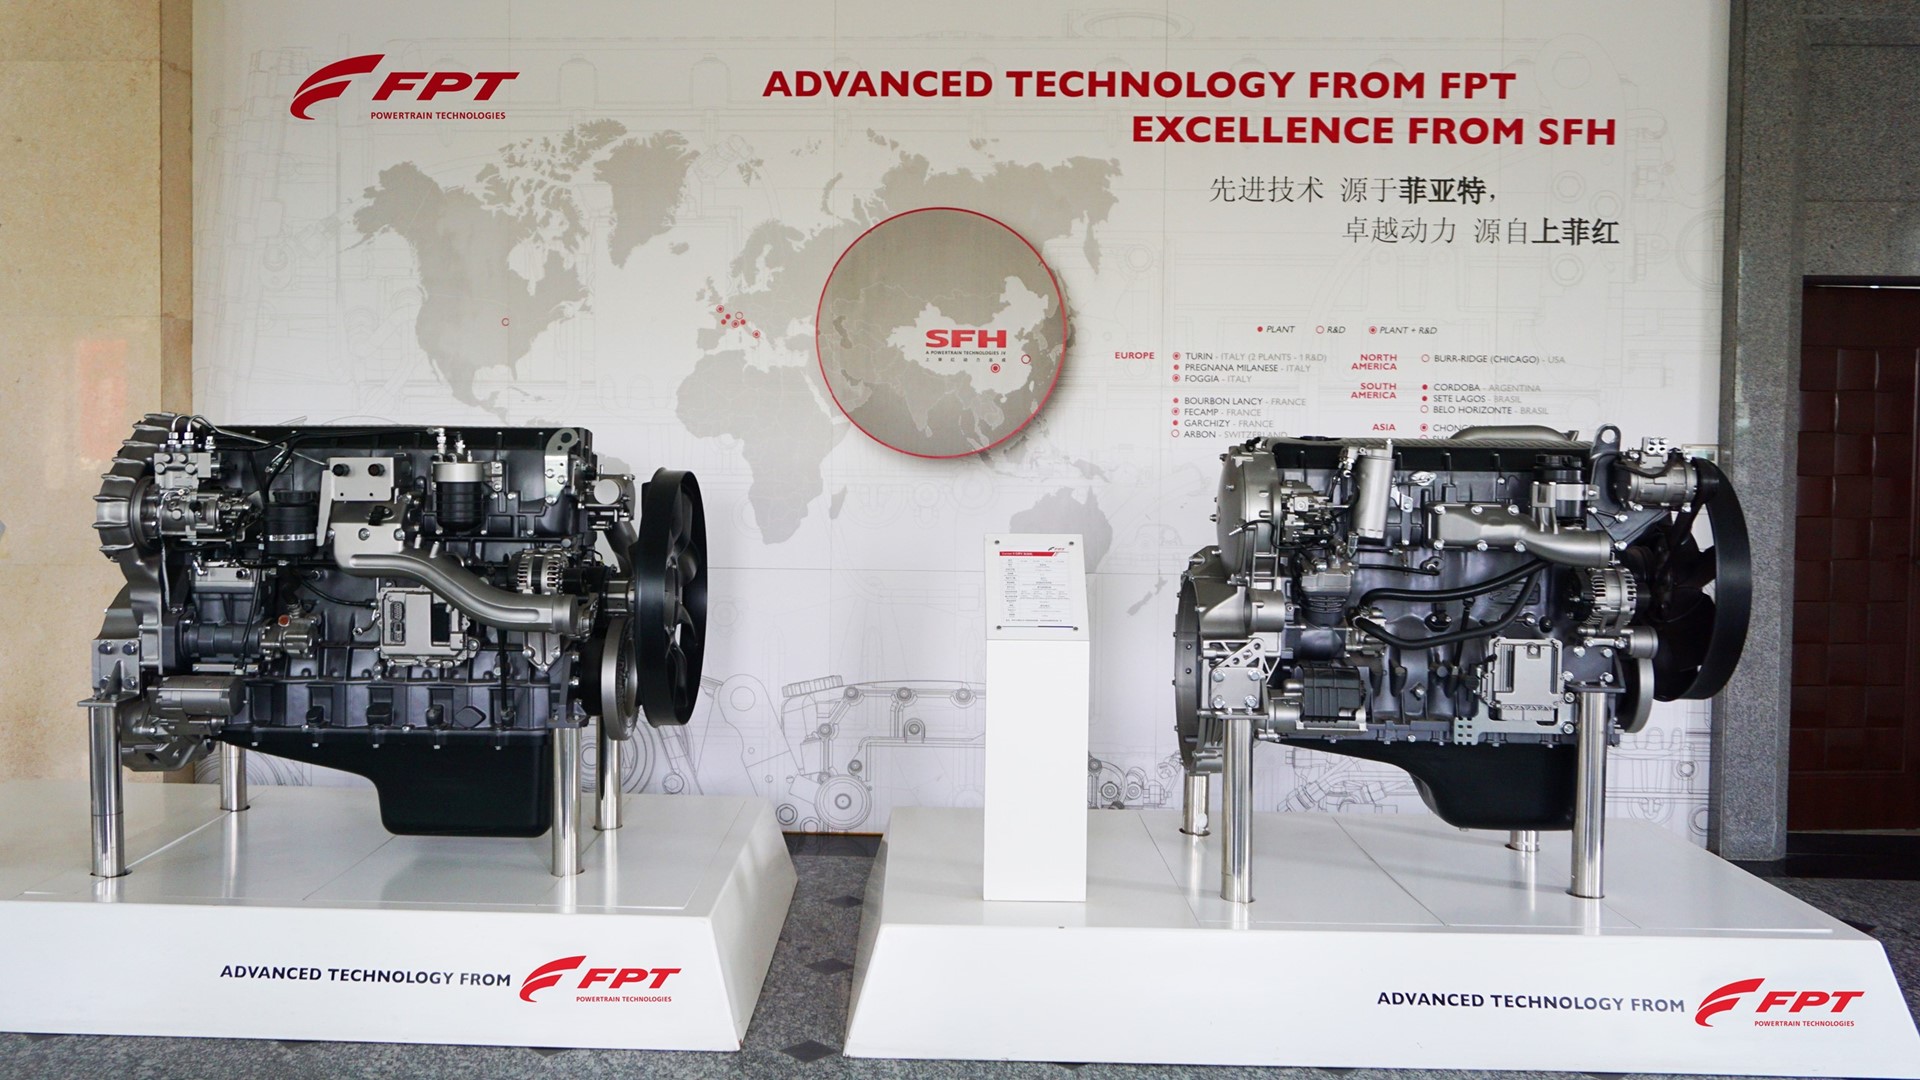 Motores FPT Cursor produzidos na China